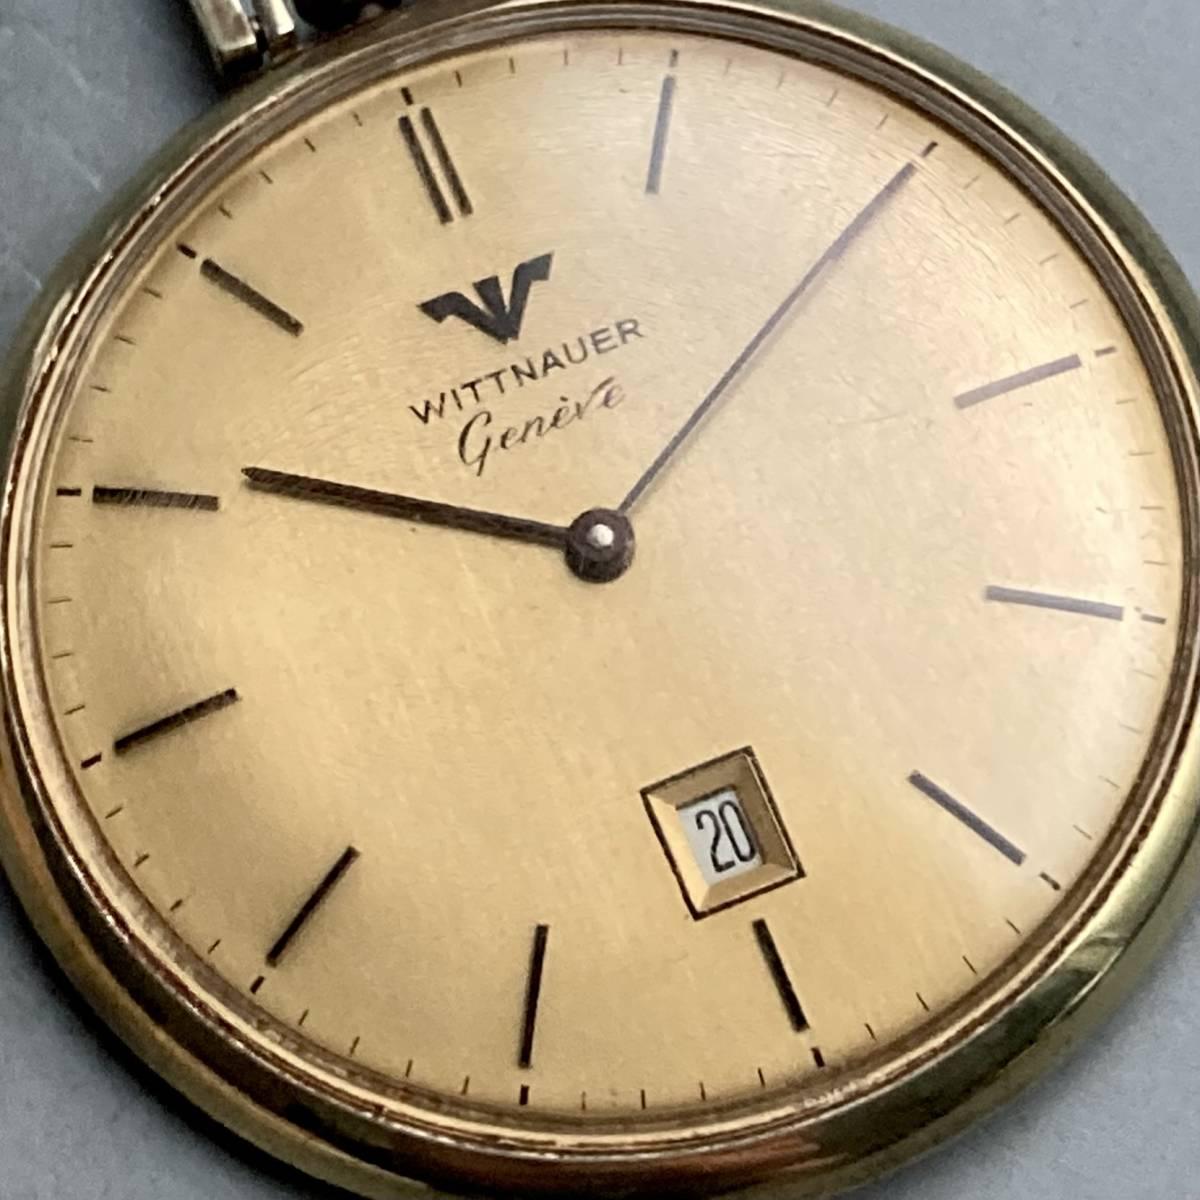 Vintage Pocket Watch Antique Wiittnauer Manual Gold Calendar Watches Open Face - Murphy Johnson Watches Co.